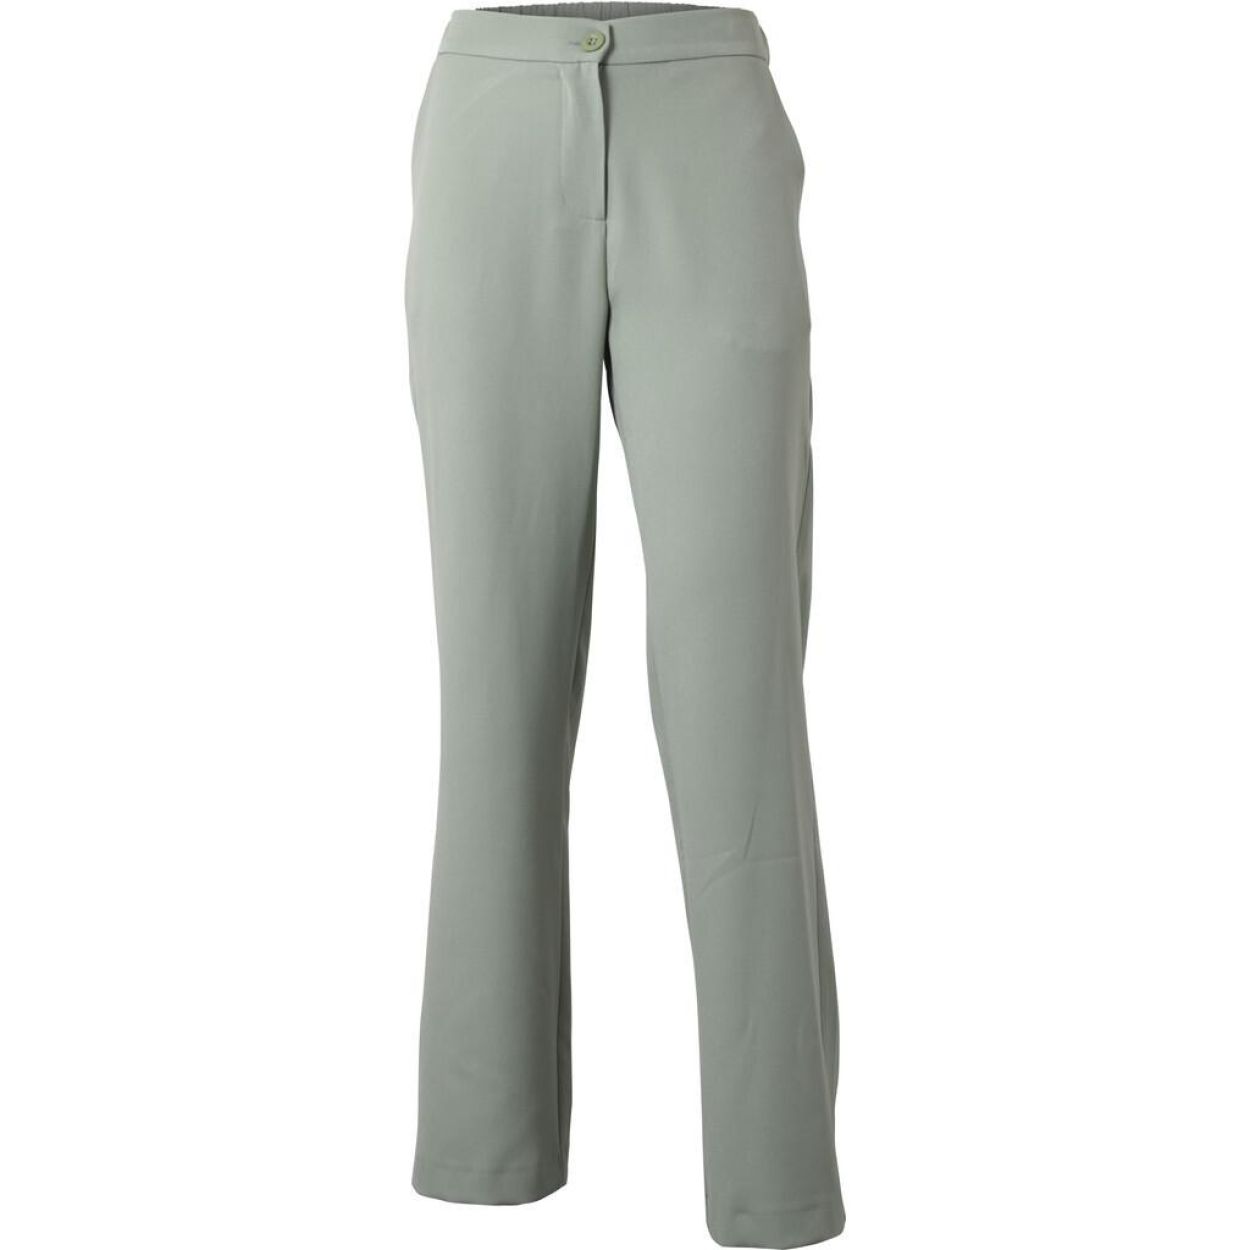 HOUNd Pants (7241251/410 Dusty green) - WeekendMode